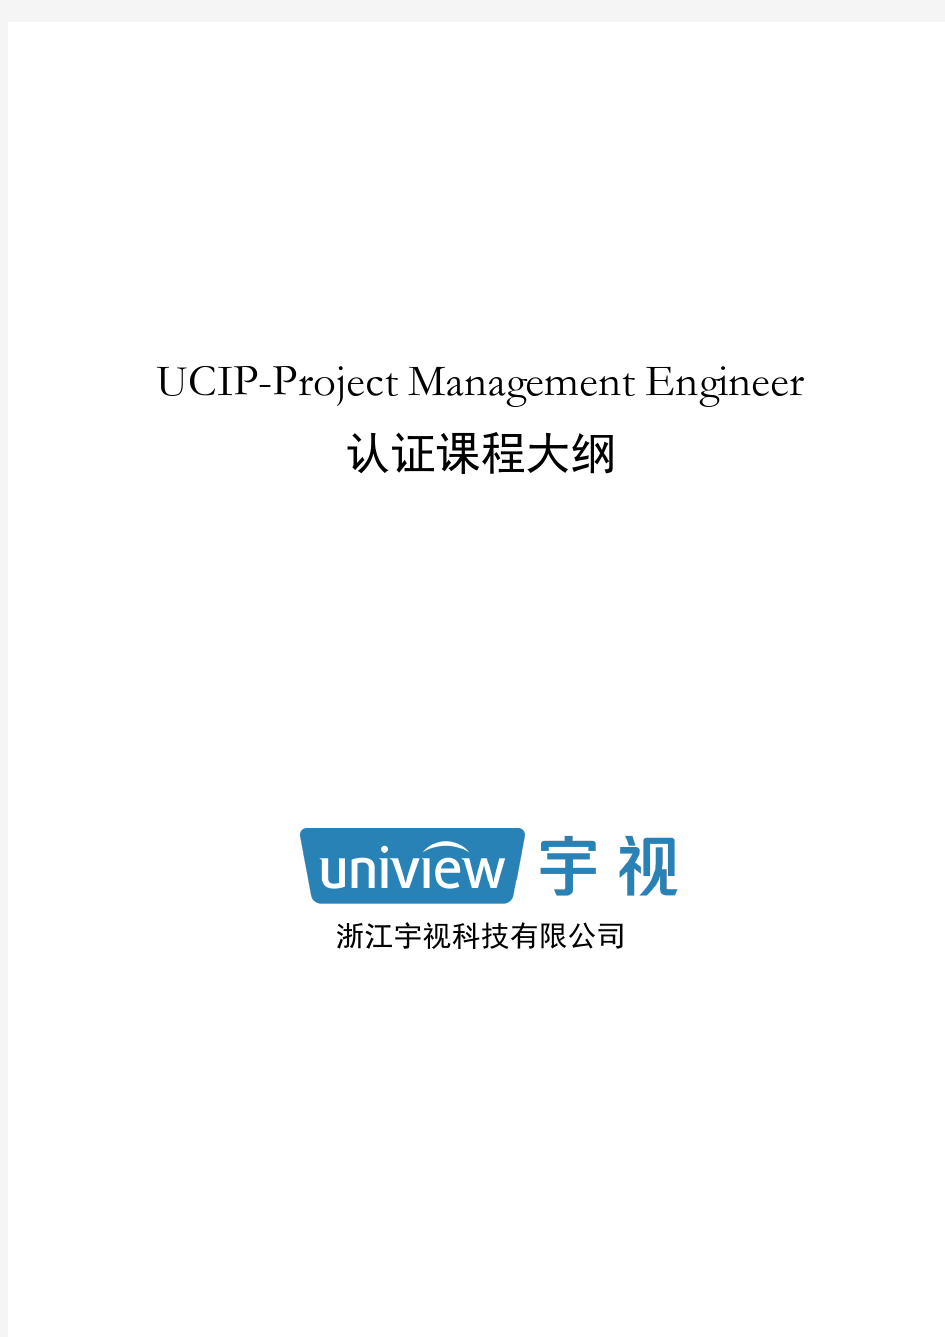 浙江宇视智能监控认证 UCIP-Project Management Engineer认证培训大纲 5